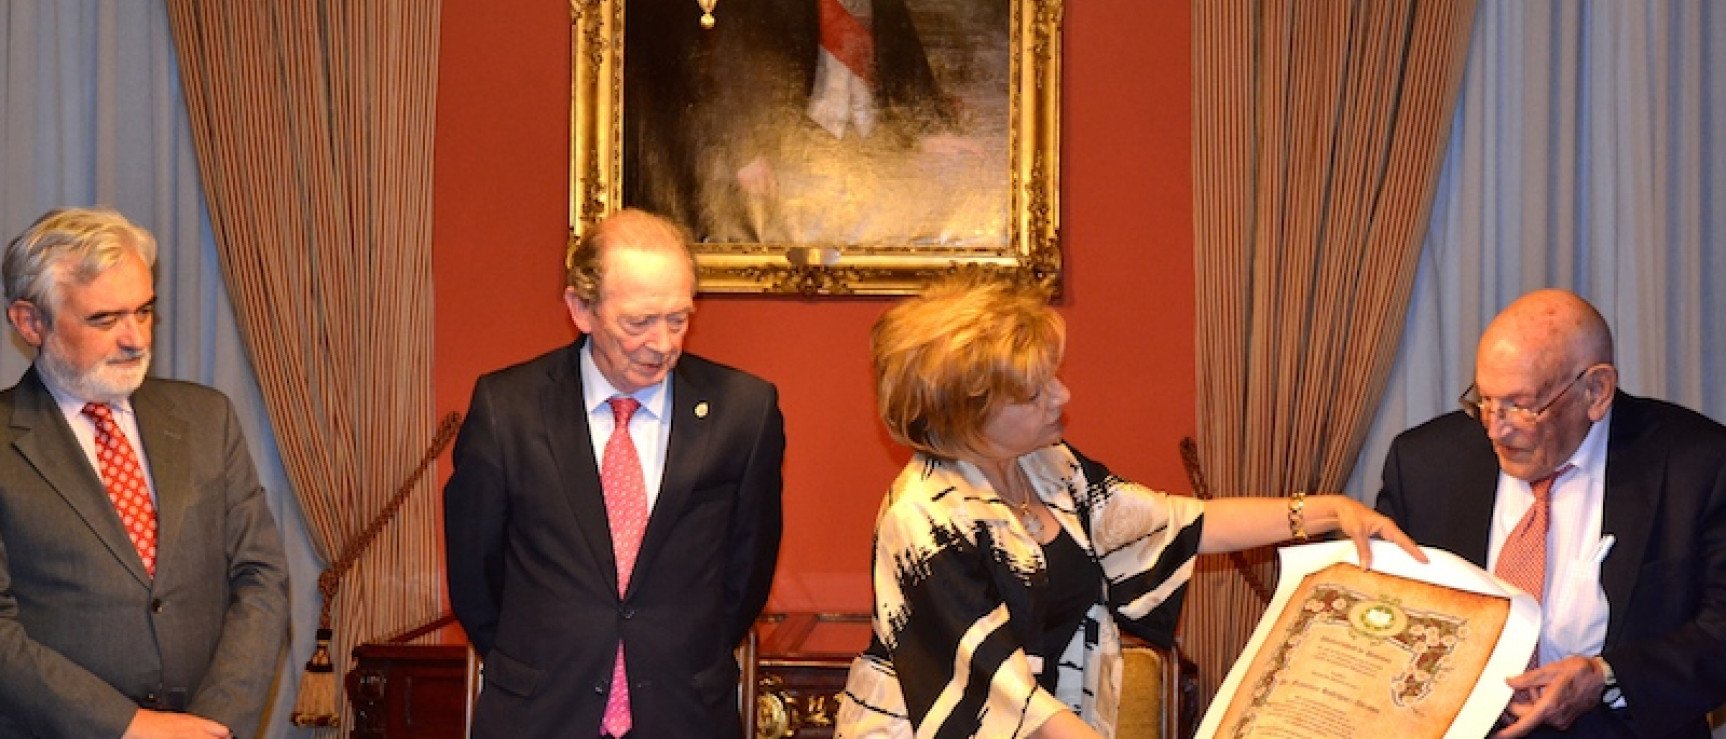 Berna Pérez Ayala entrega el pergamino de honor a Rodríguez Adrados.